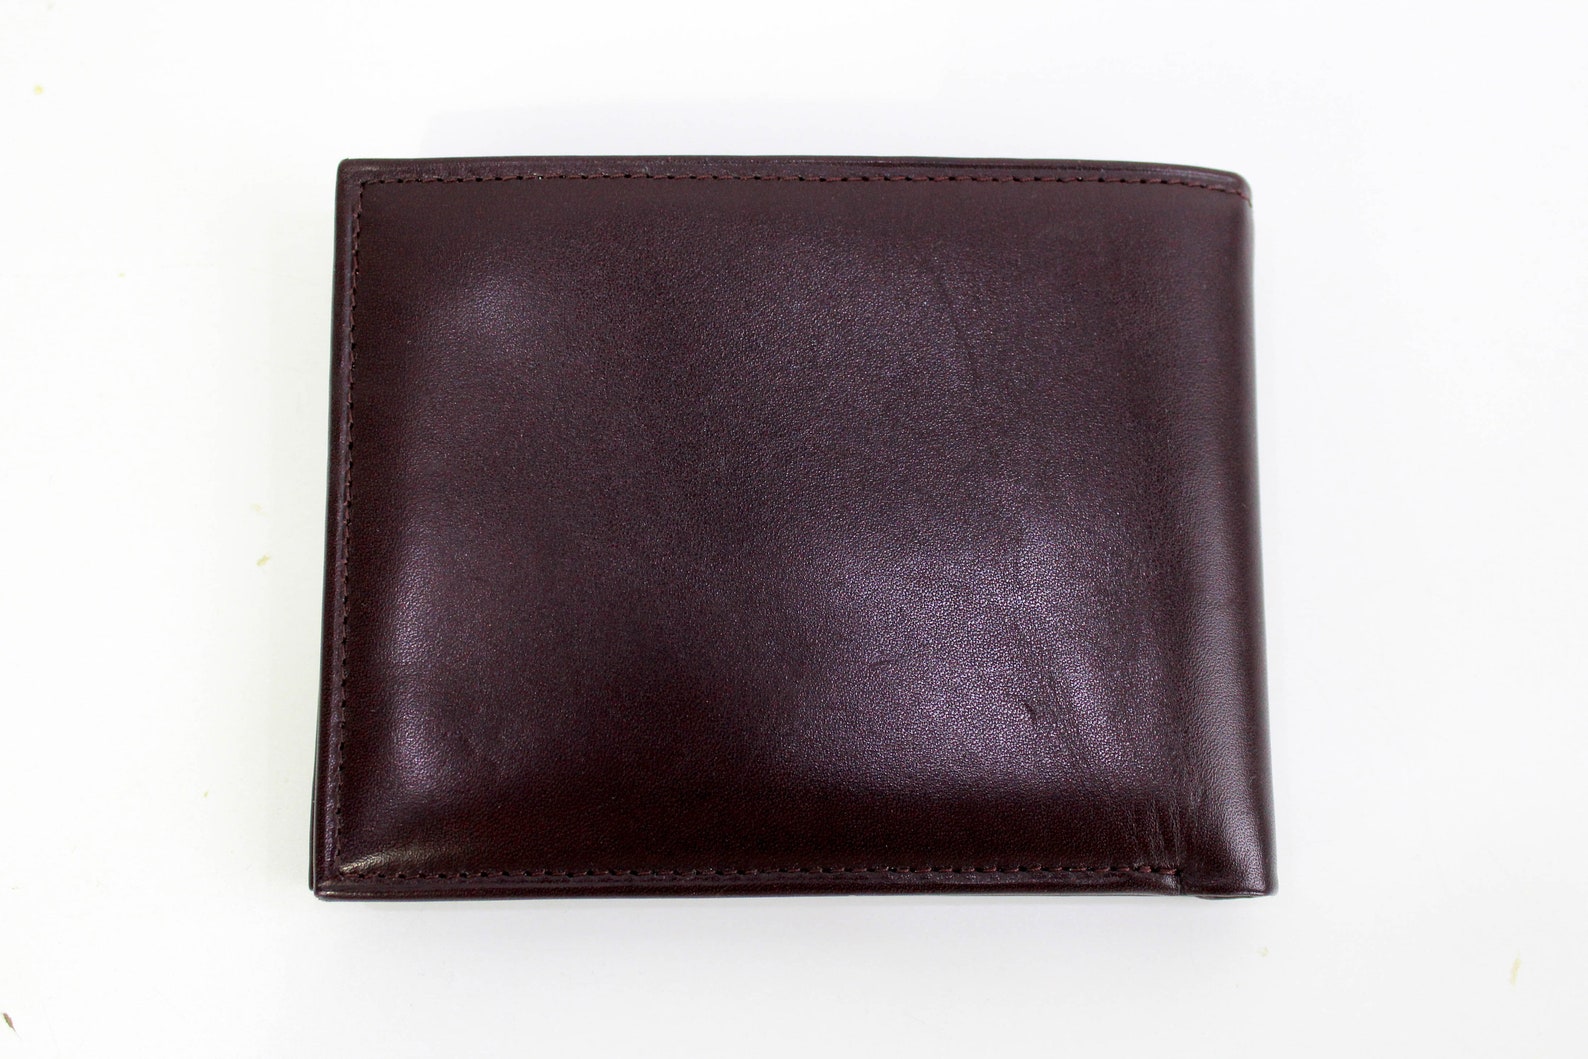 Yves Saint Laurent Leather Wallet Bi-Fold Wallet Brown | Etsy